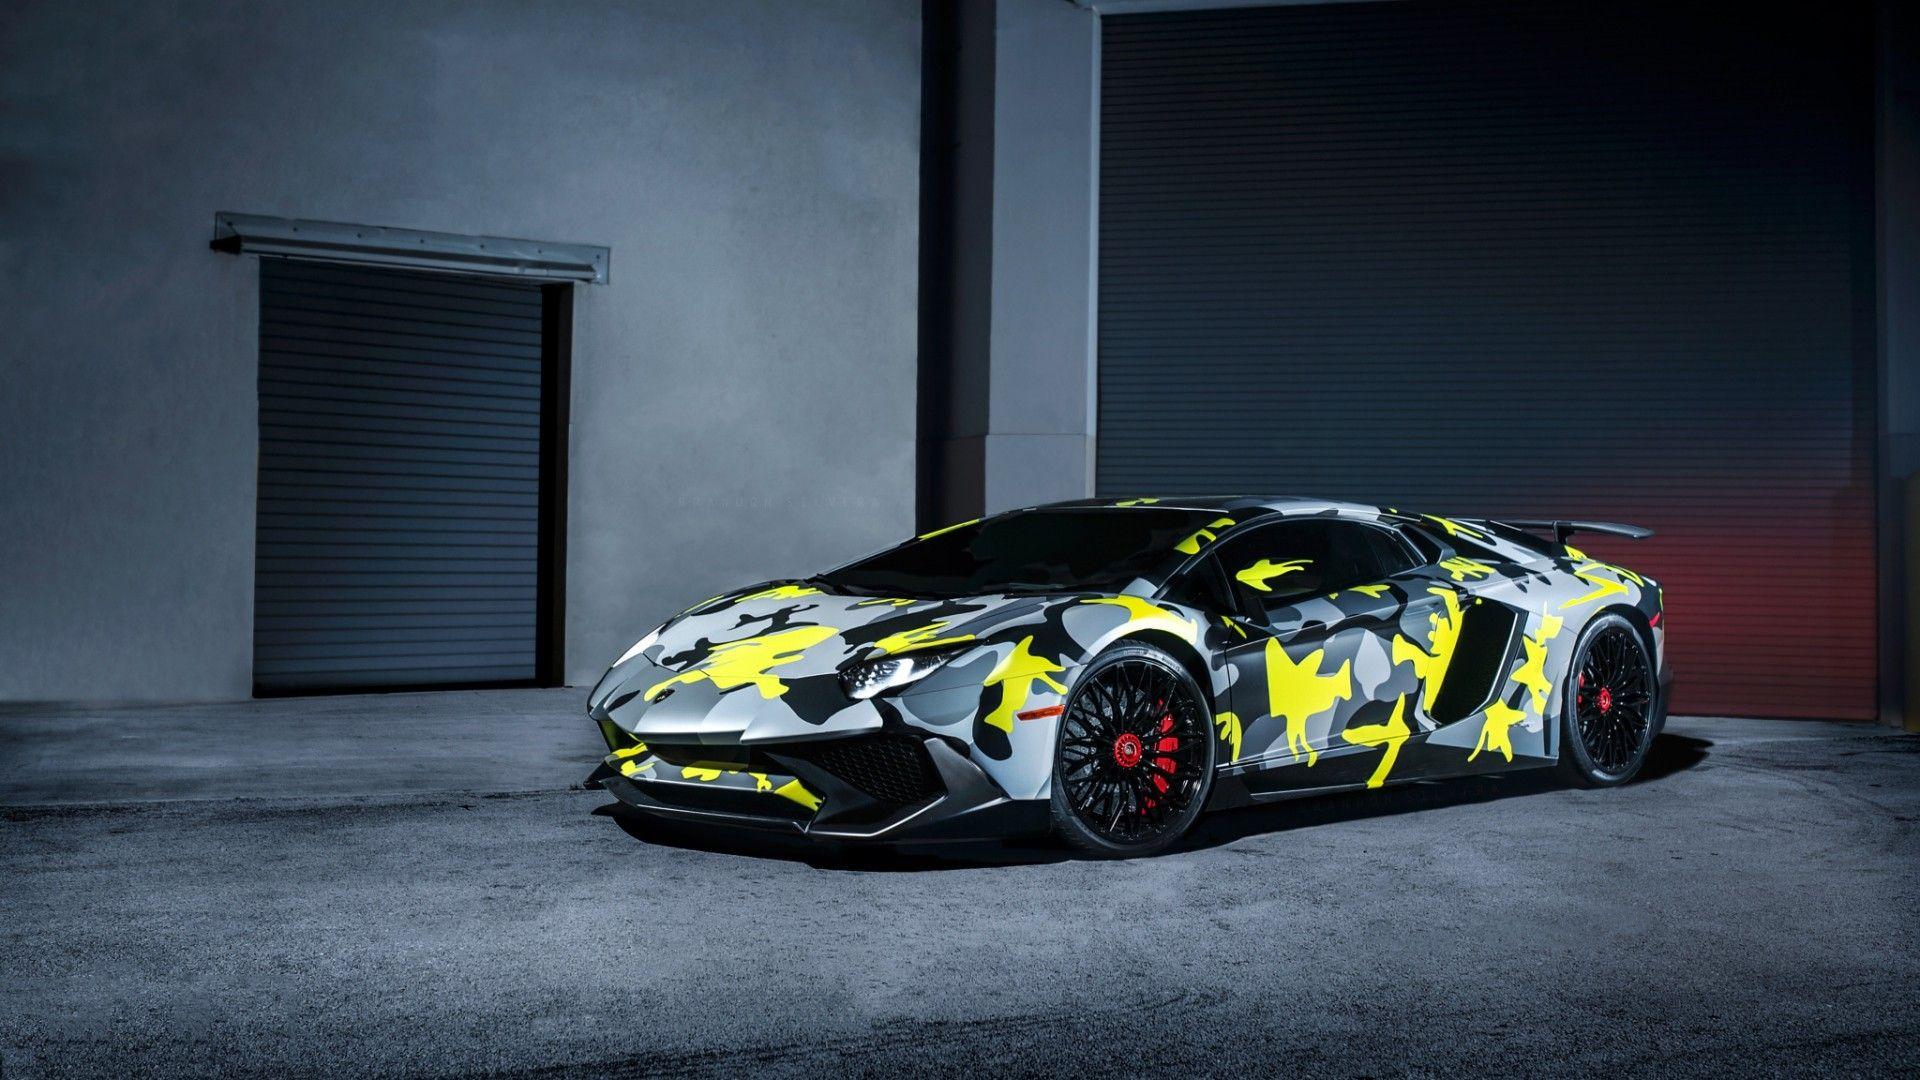 New Lamborghini Murcielago Lp650 Wallpaper. Amazing Wallpaper Image